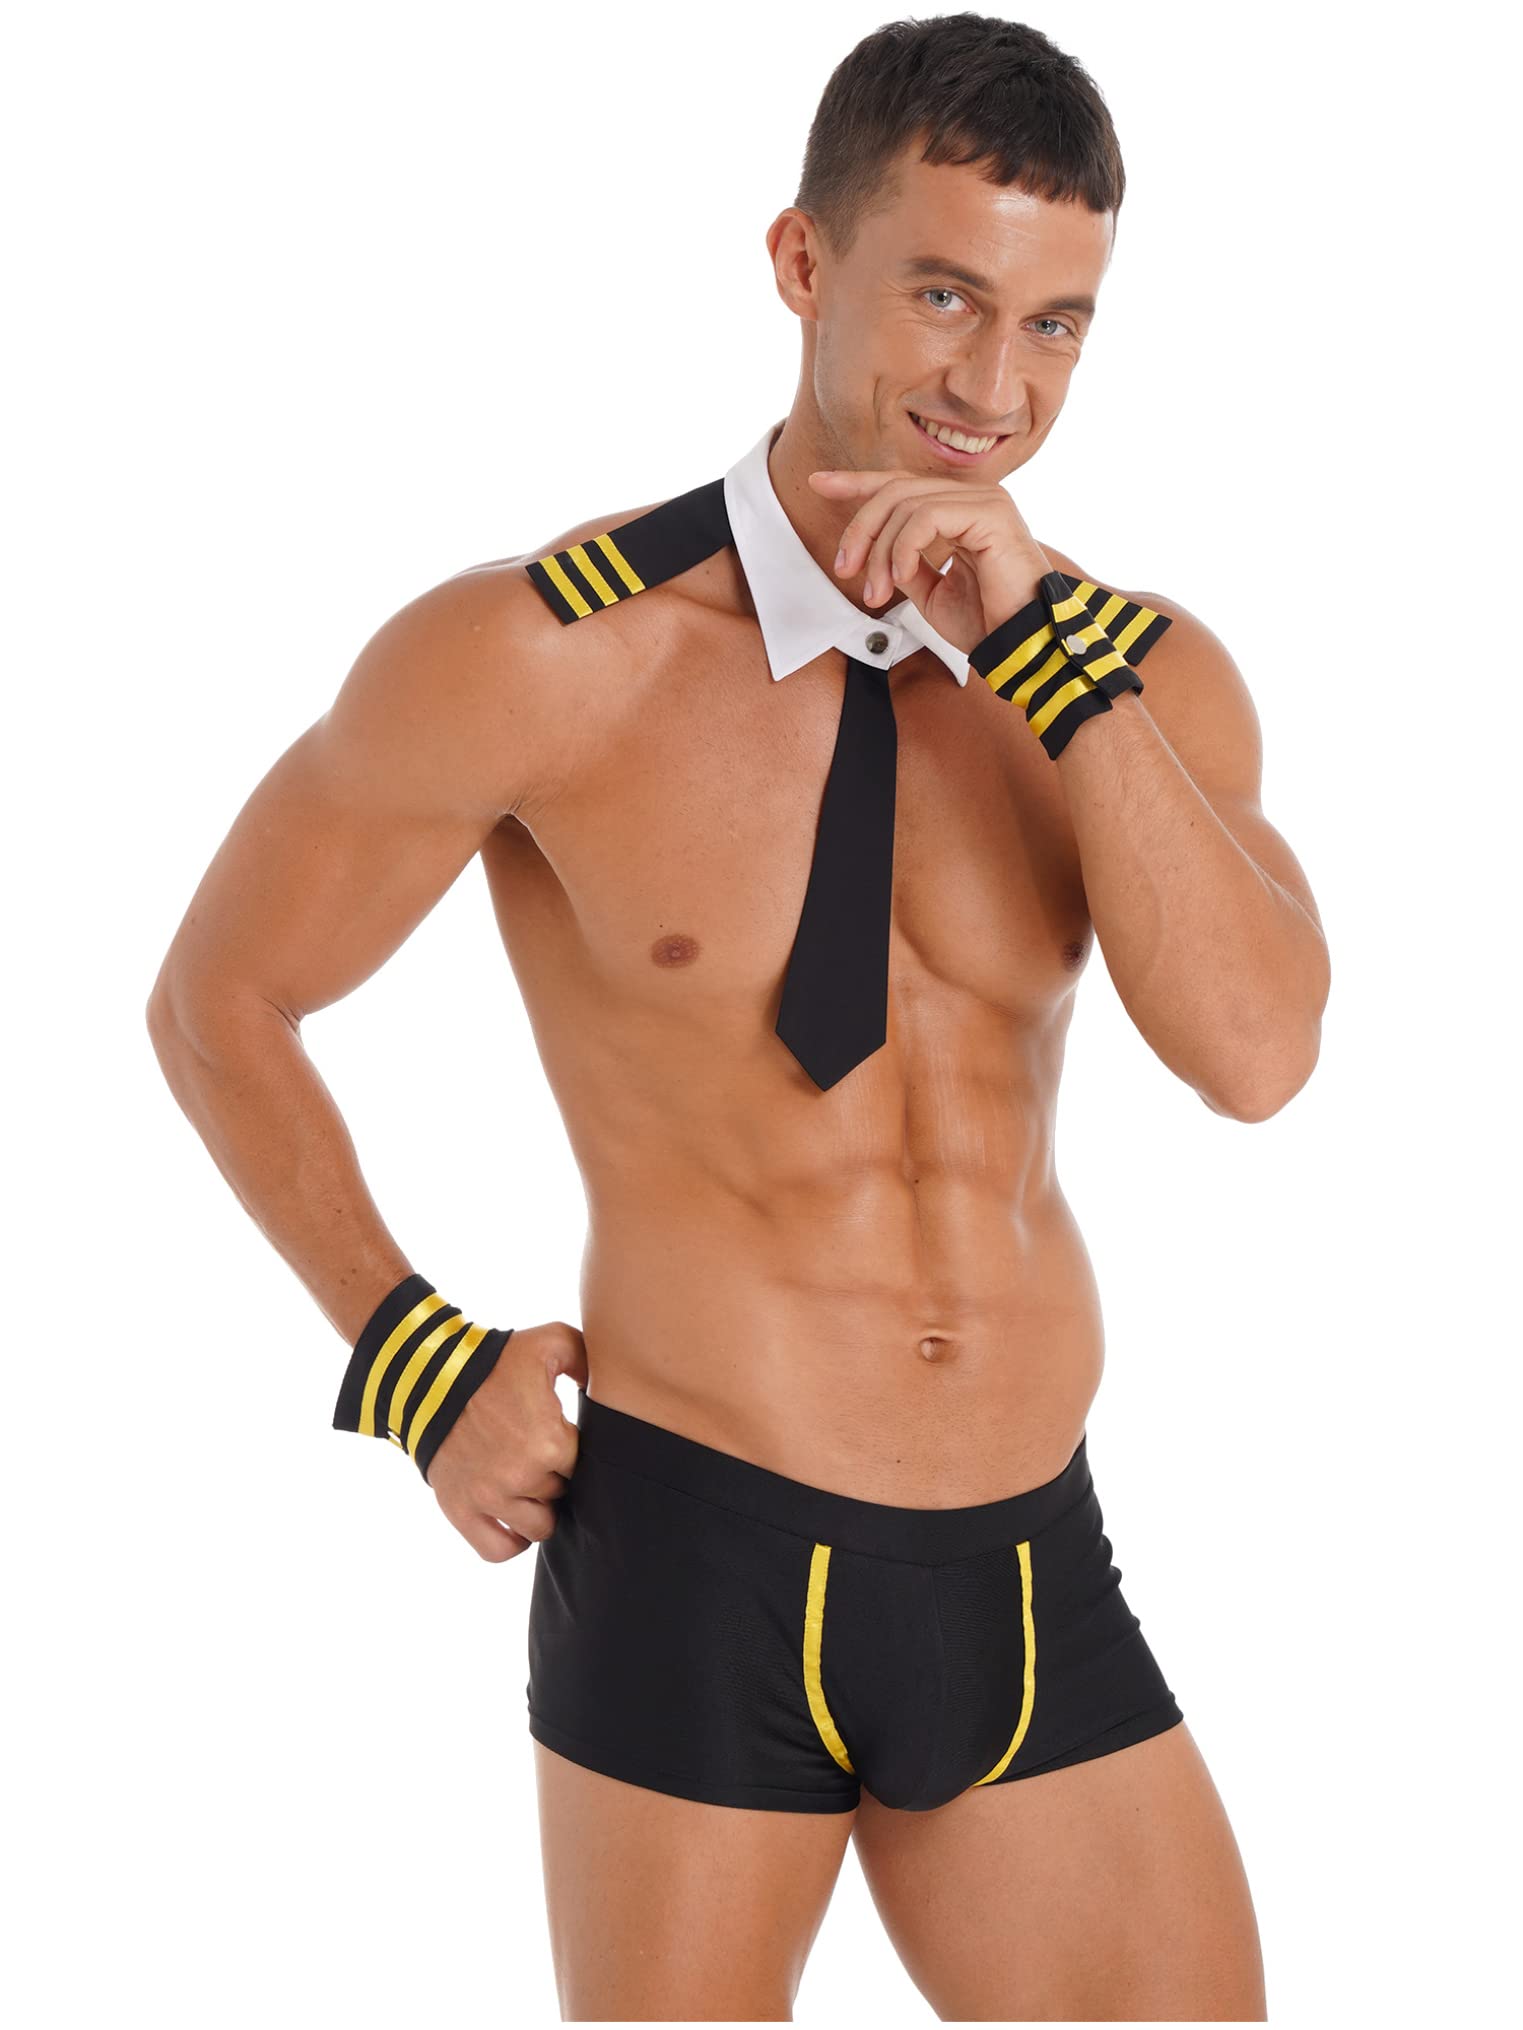 ACSUSS Men's Sailor Halloween Cosplay Costume Lingerie Outfit Boxer Briefs Collar Cuffs Set